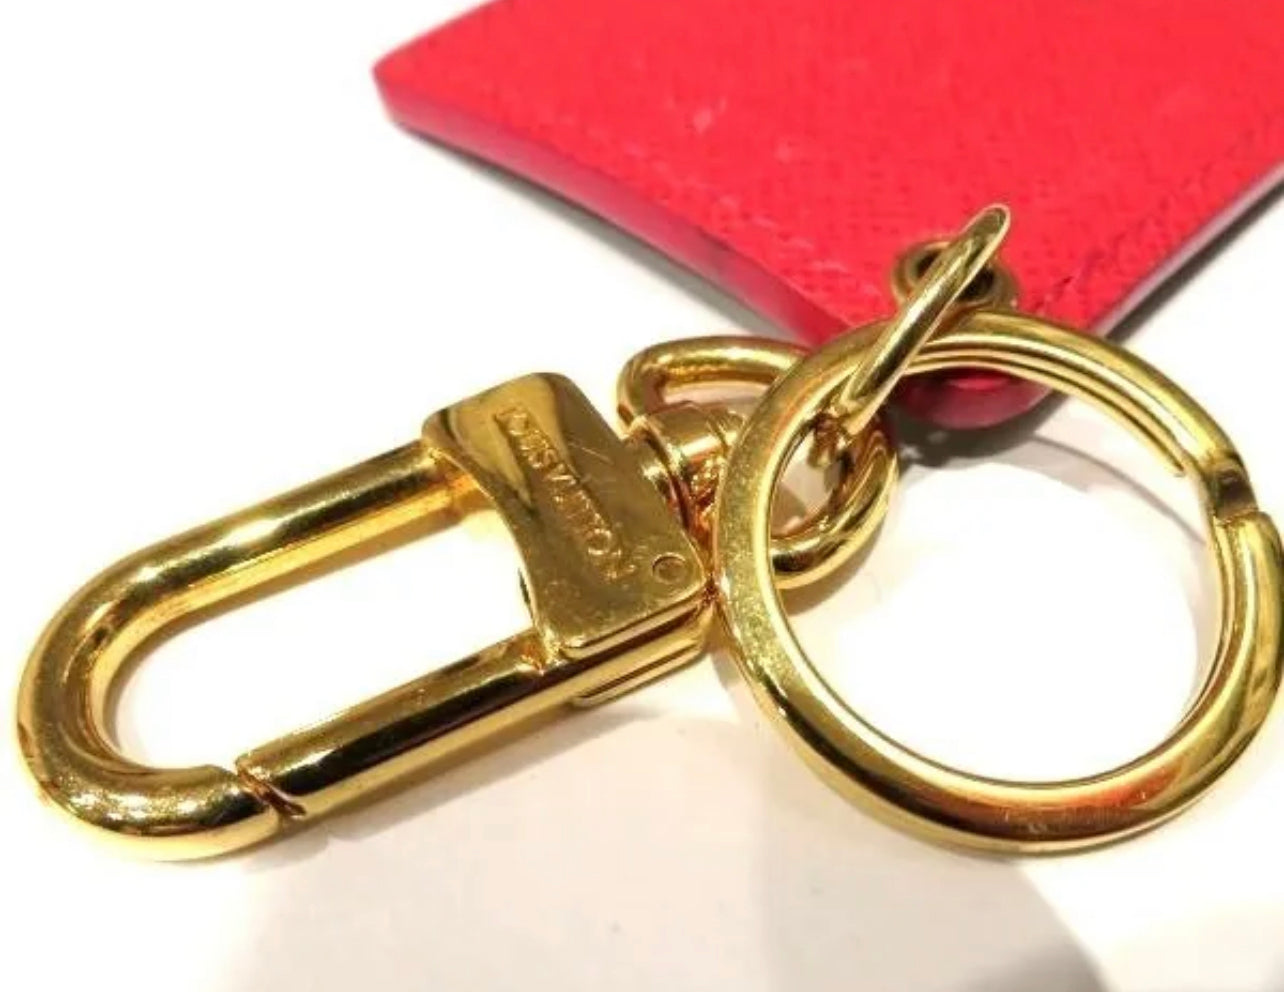 Louis Vuitton Monogram Keychain on SALE